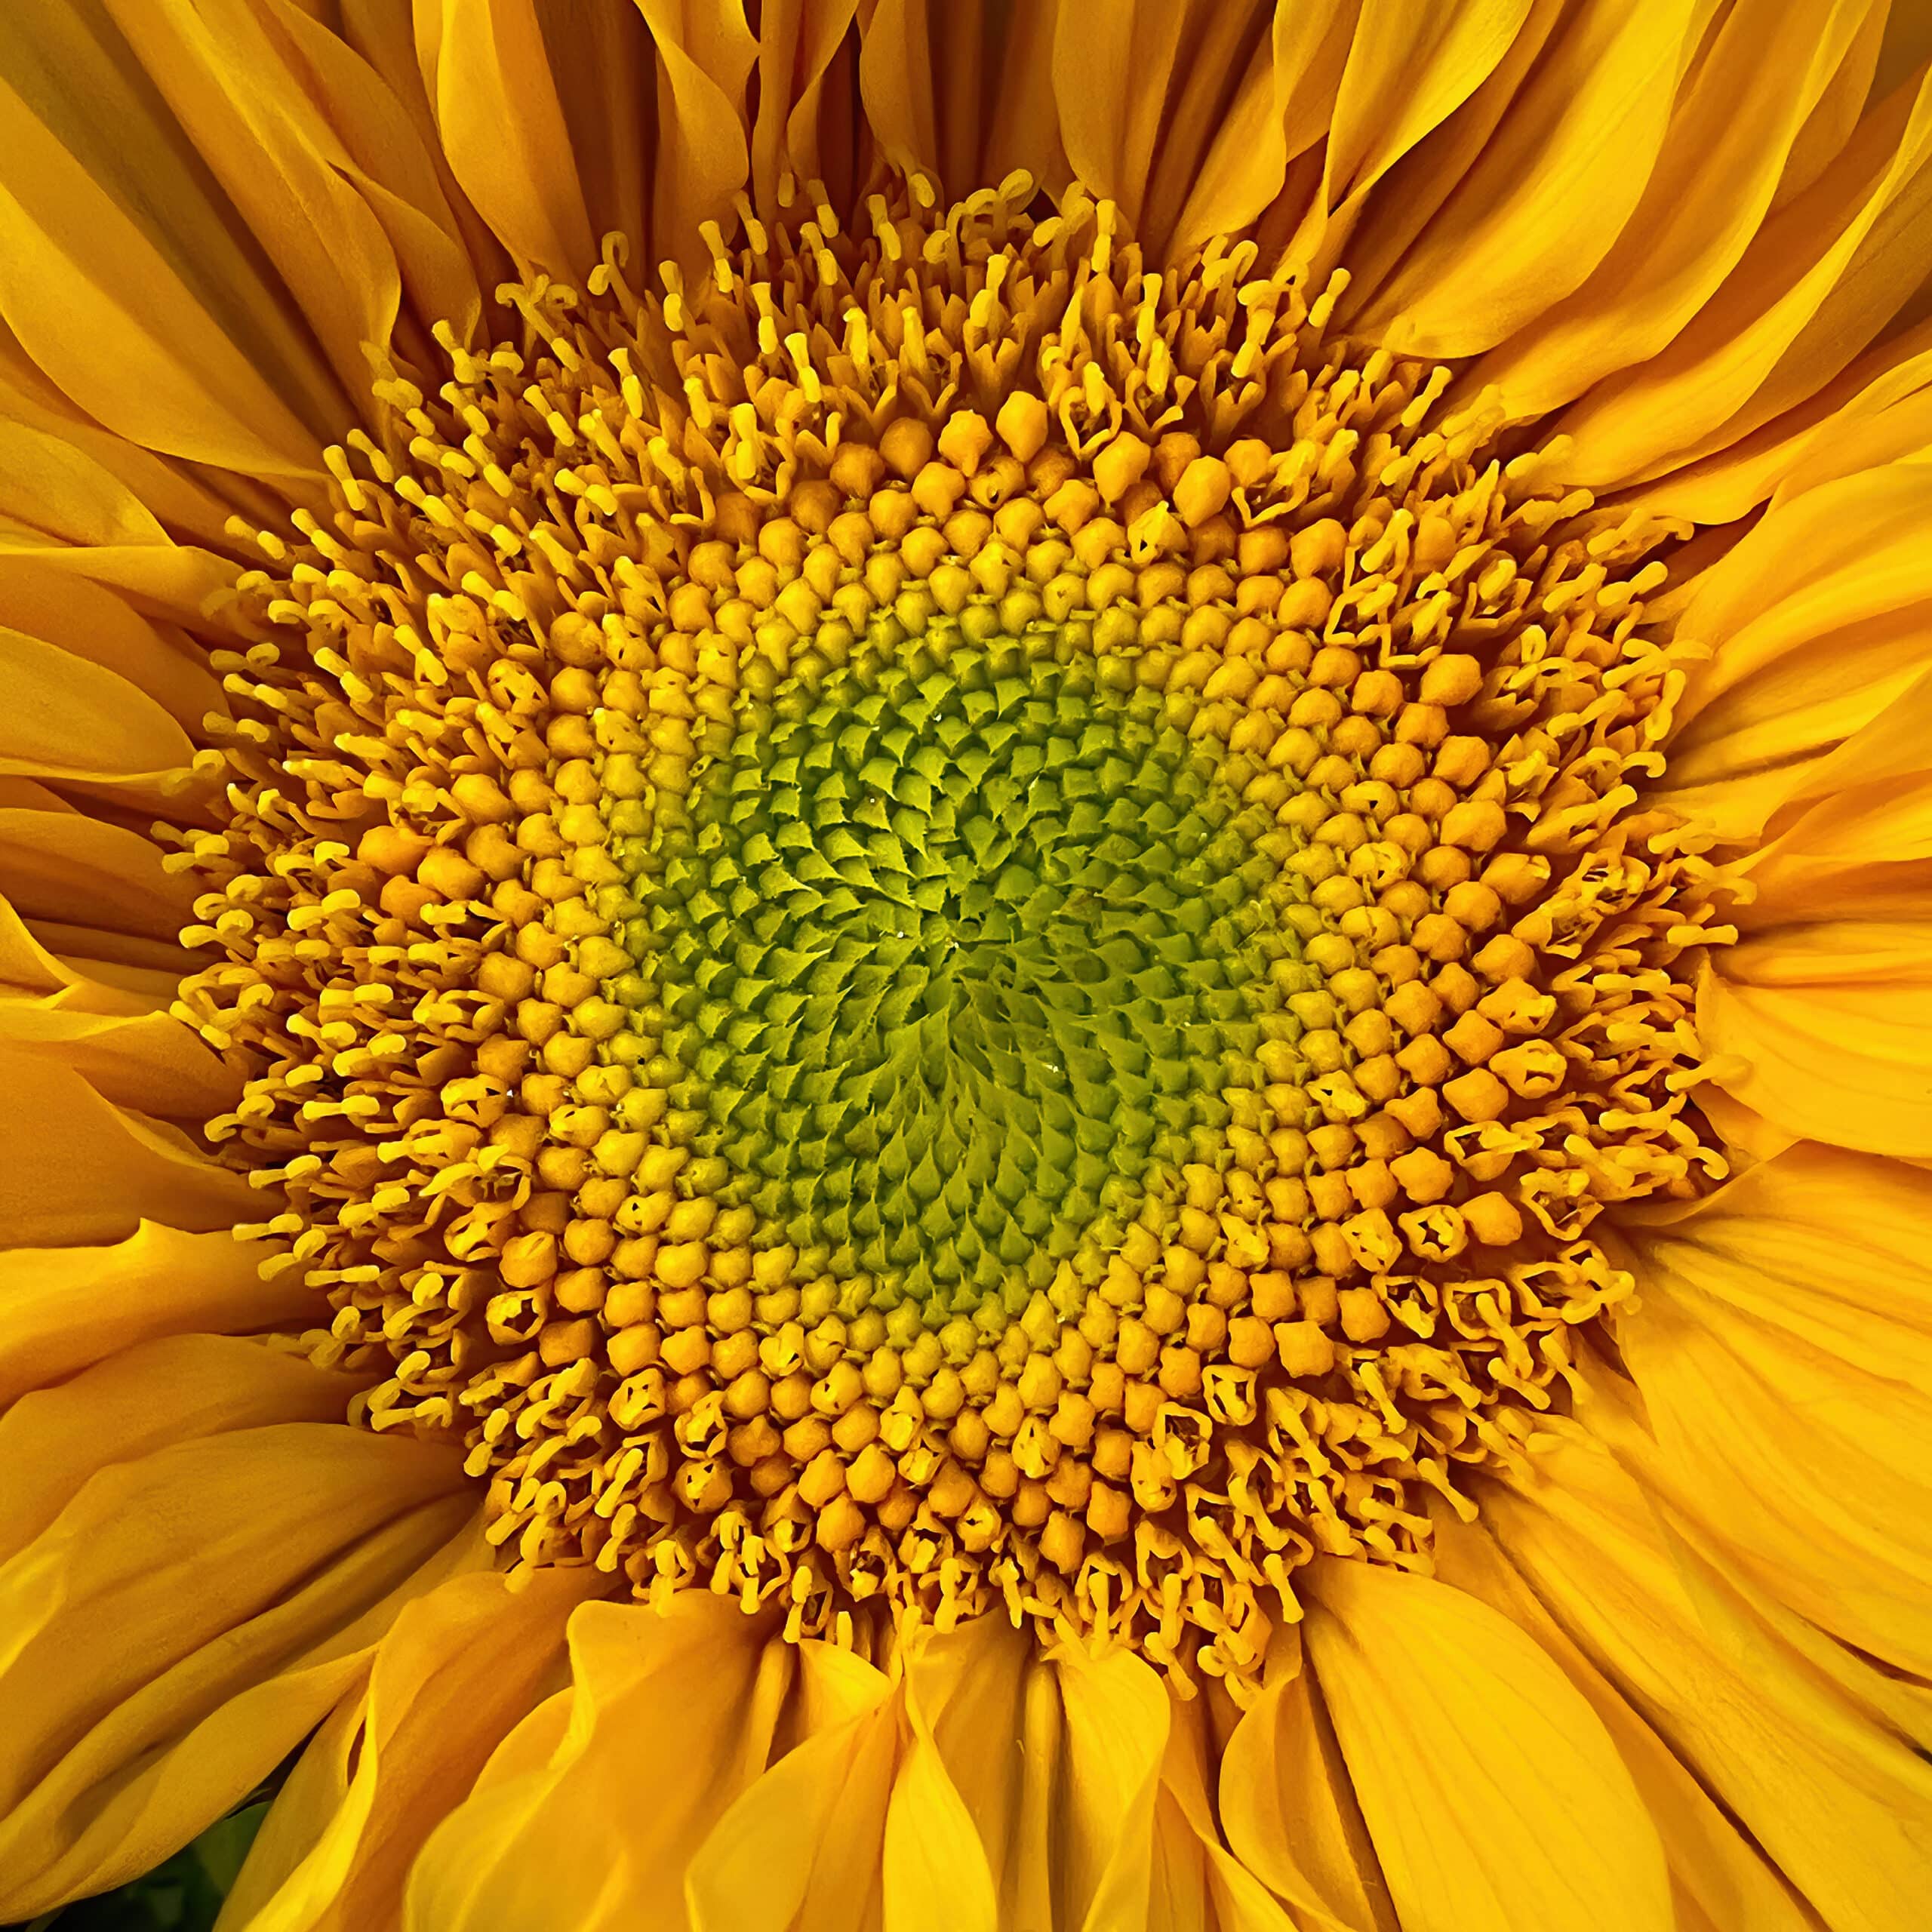 The center of a sunflower